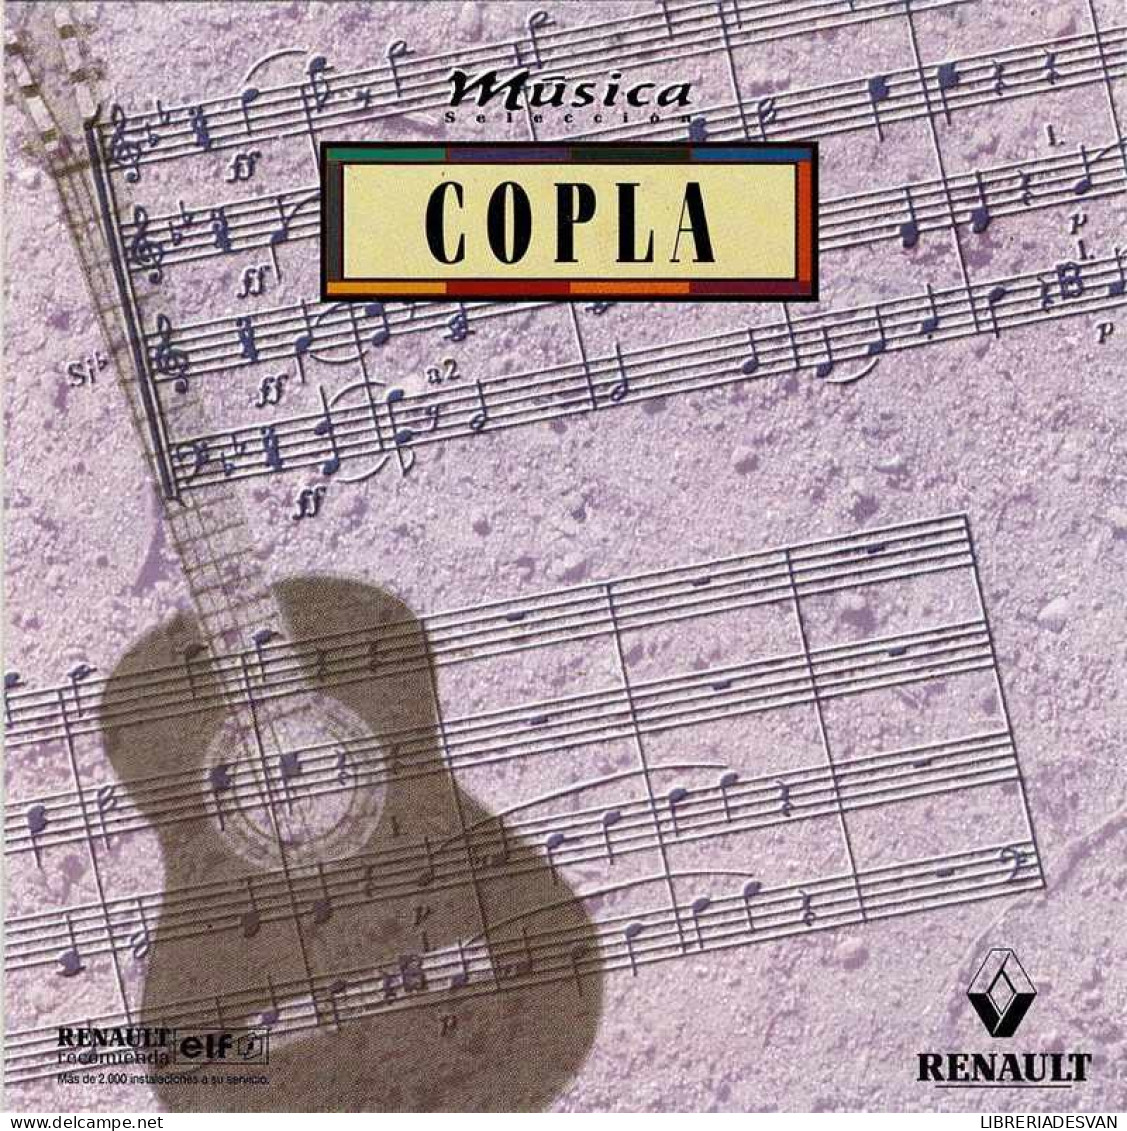 La Copla. CD - Other - Spanish Music